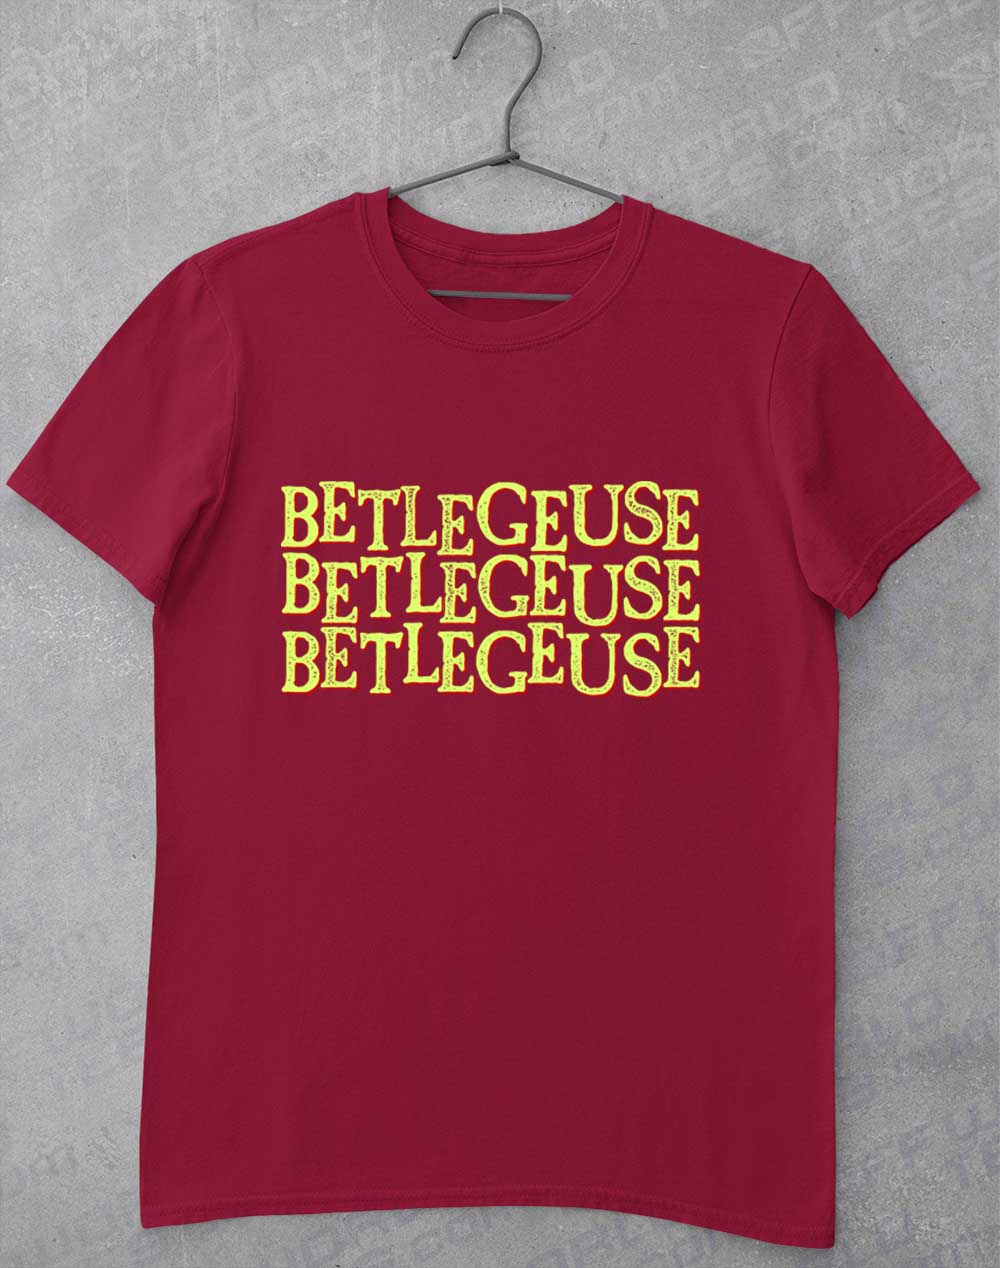 Cardinal Red - Betelgeuse Betelgeuse Betelgeuse T-Shirt